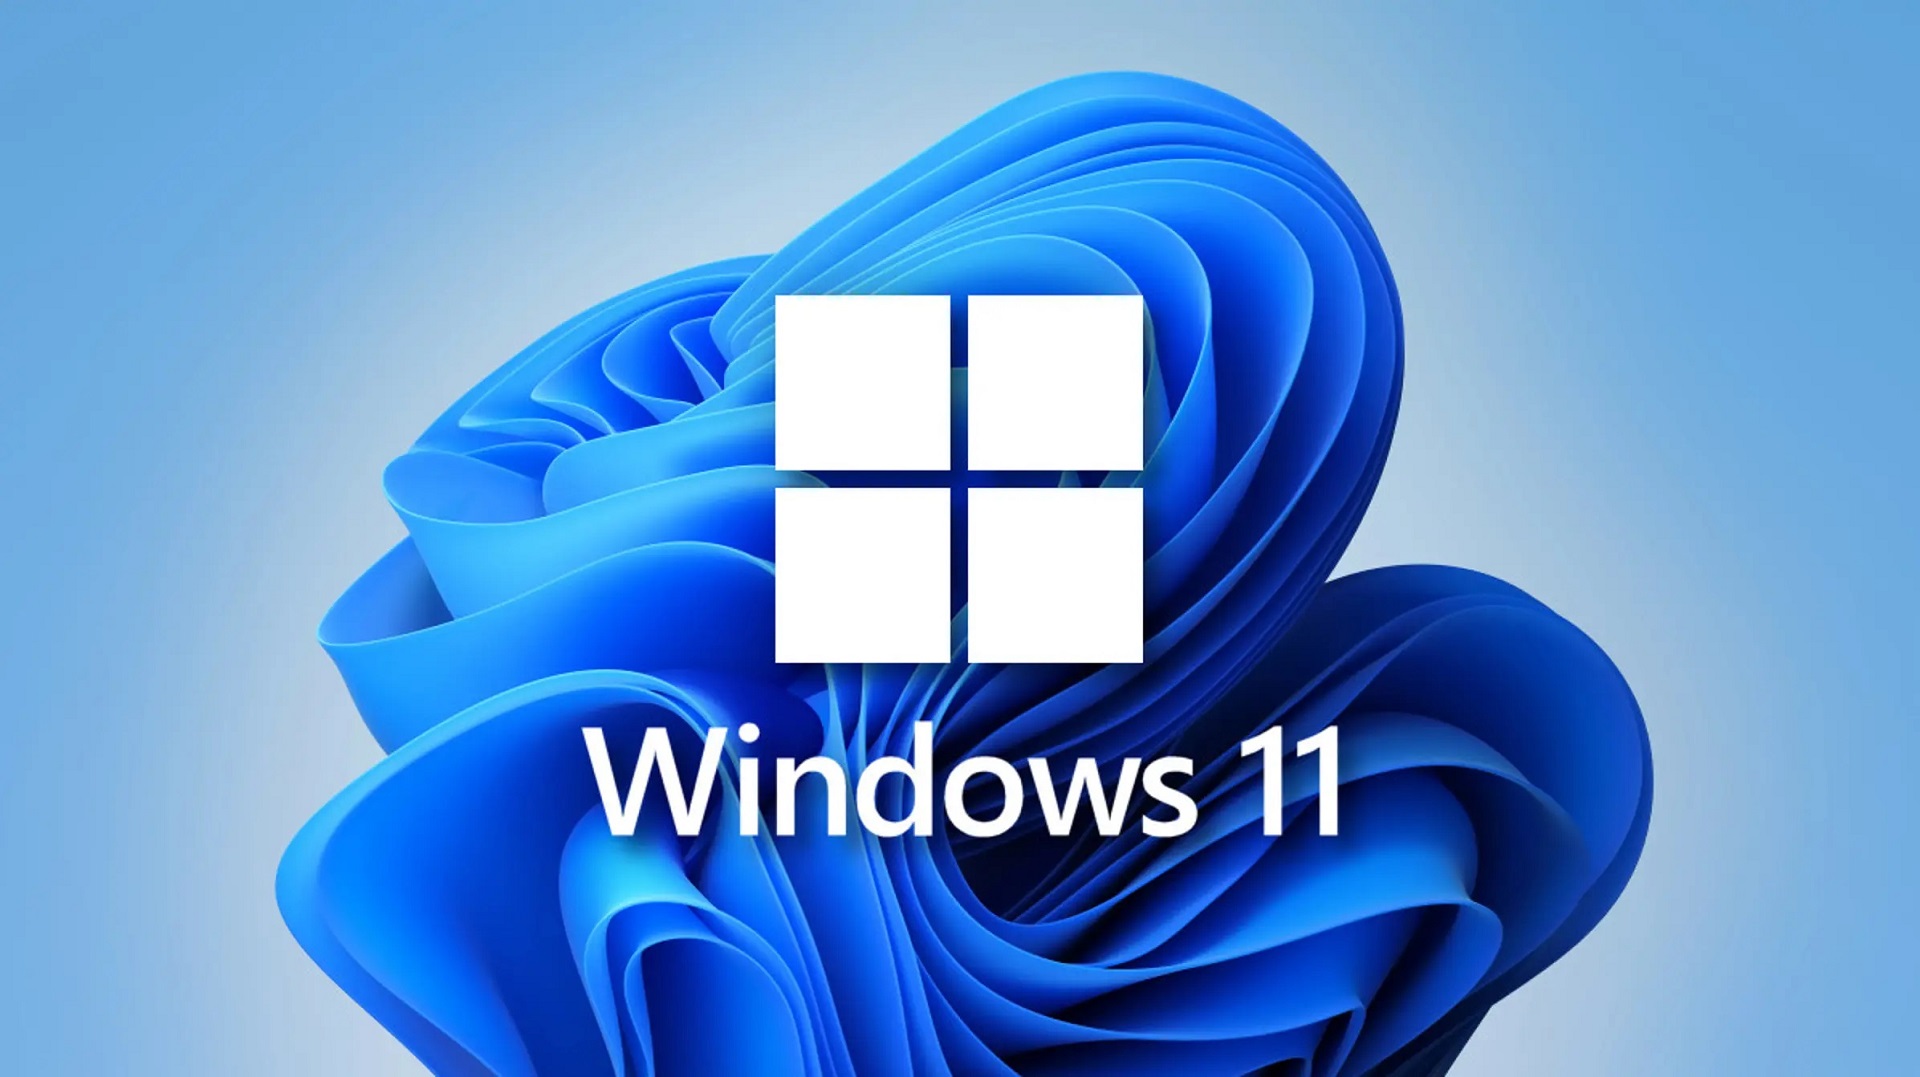 Windows 11 will require a Microsoft Account